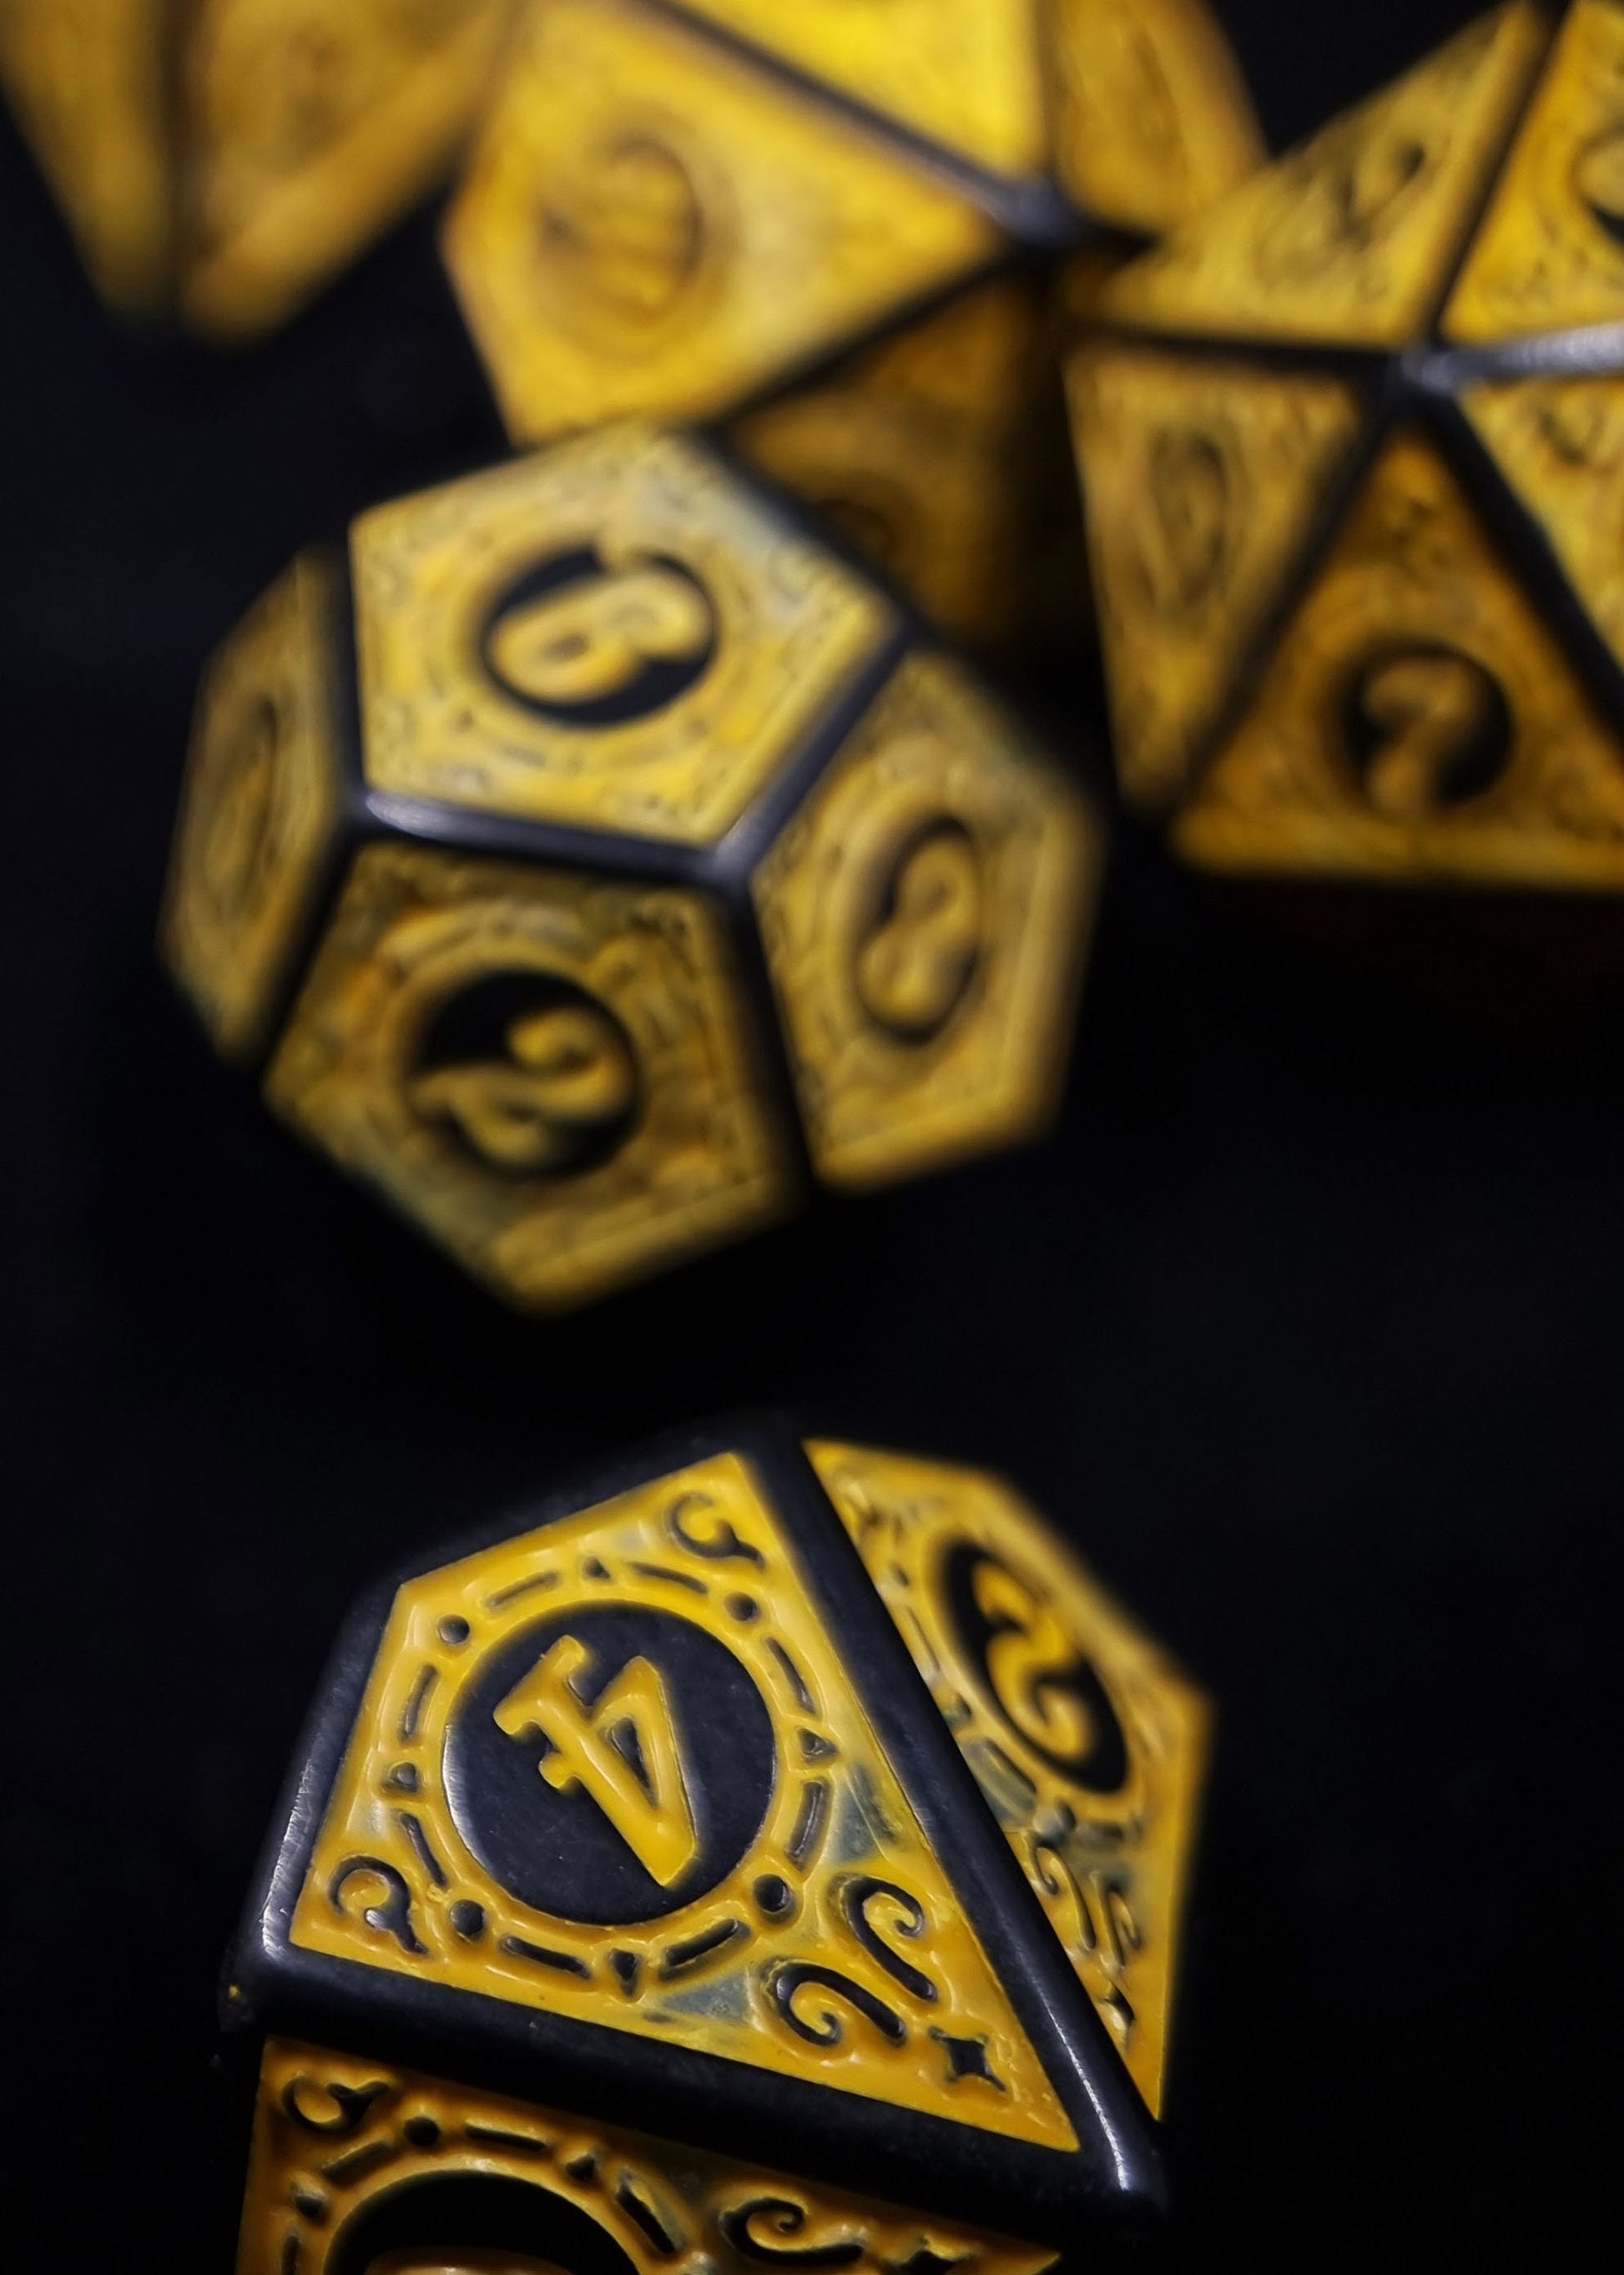 Magic Burst Yellow Polyhedral Dice Set - Black Dice with Yellow Design